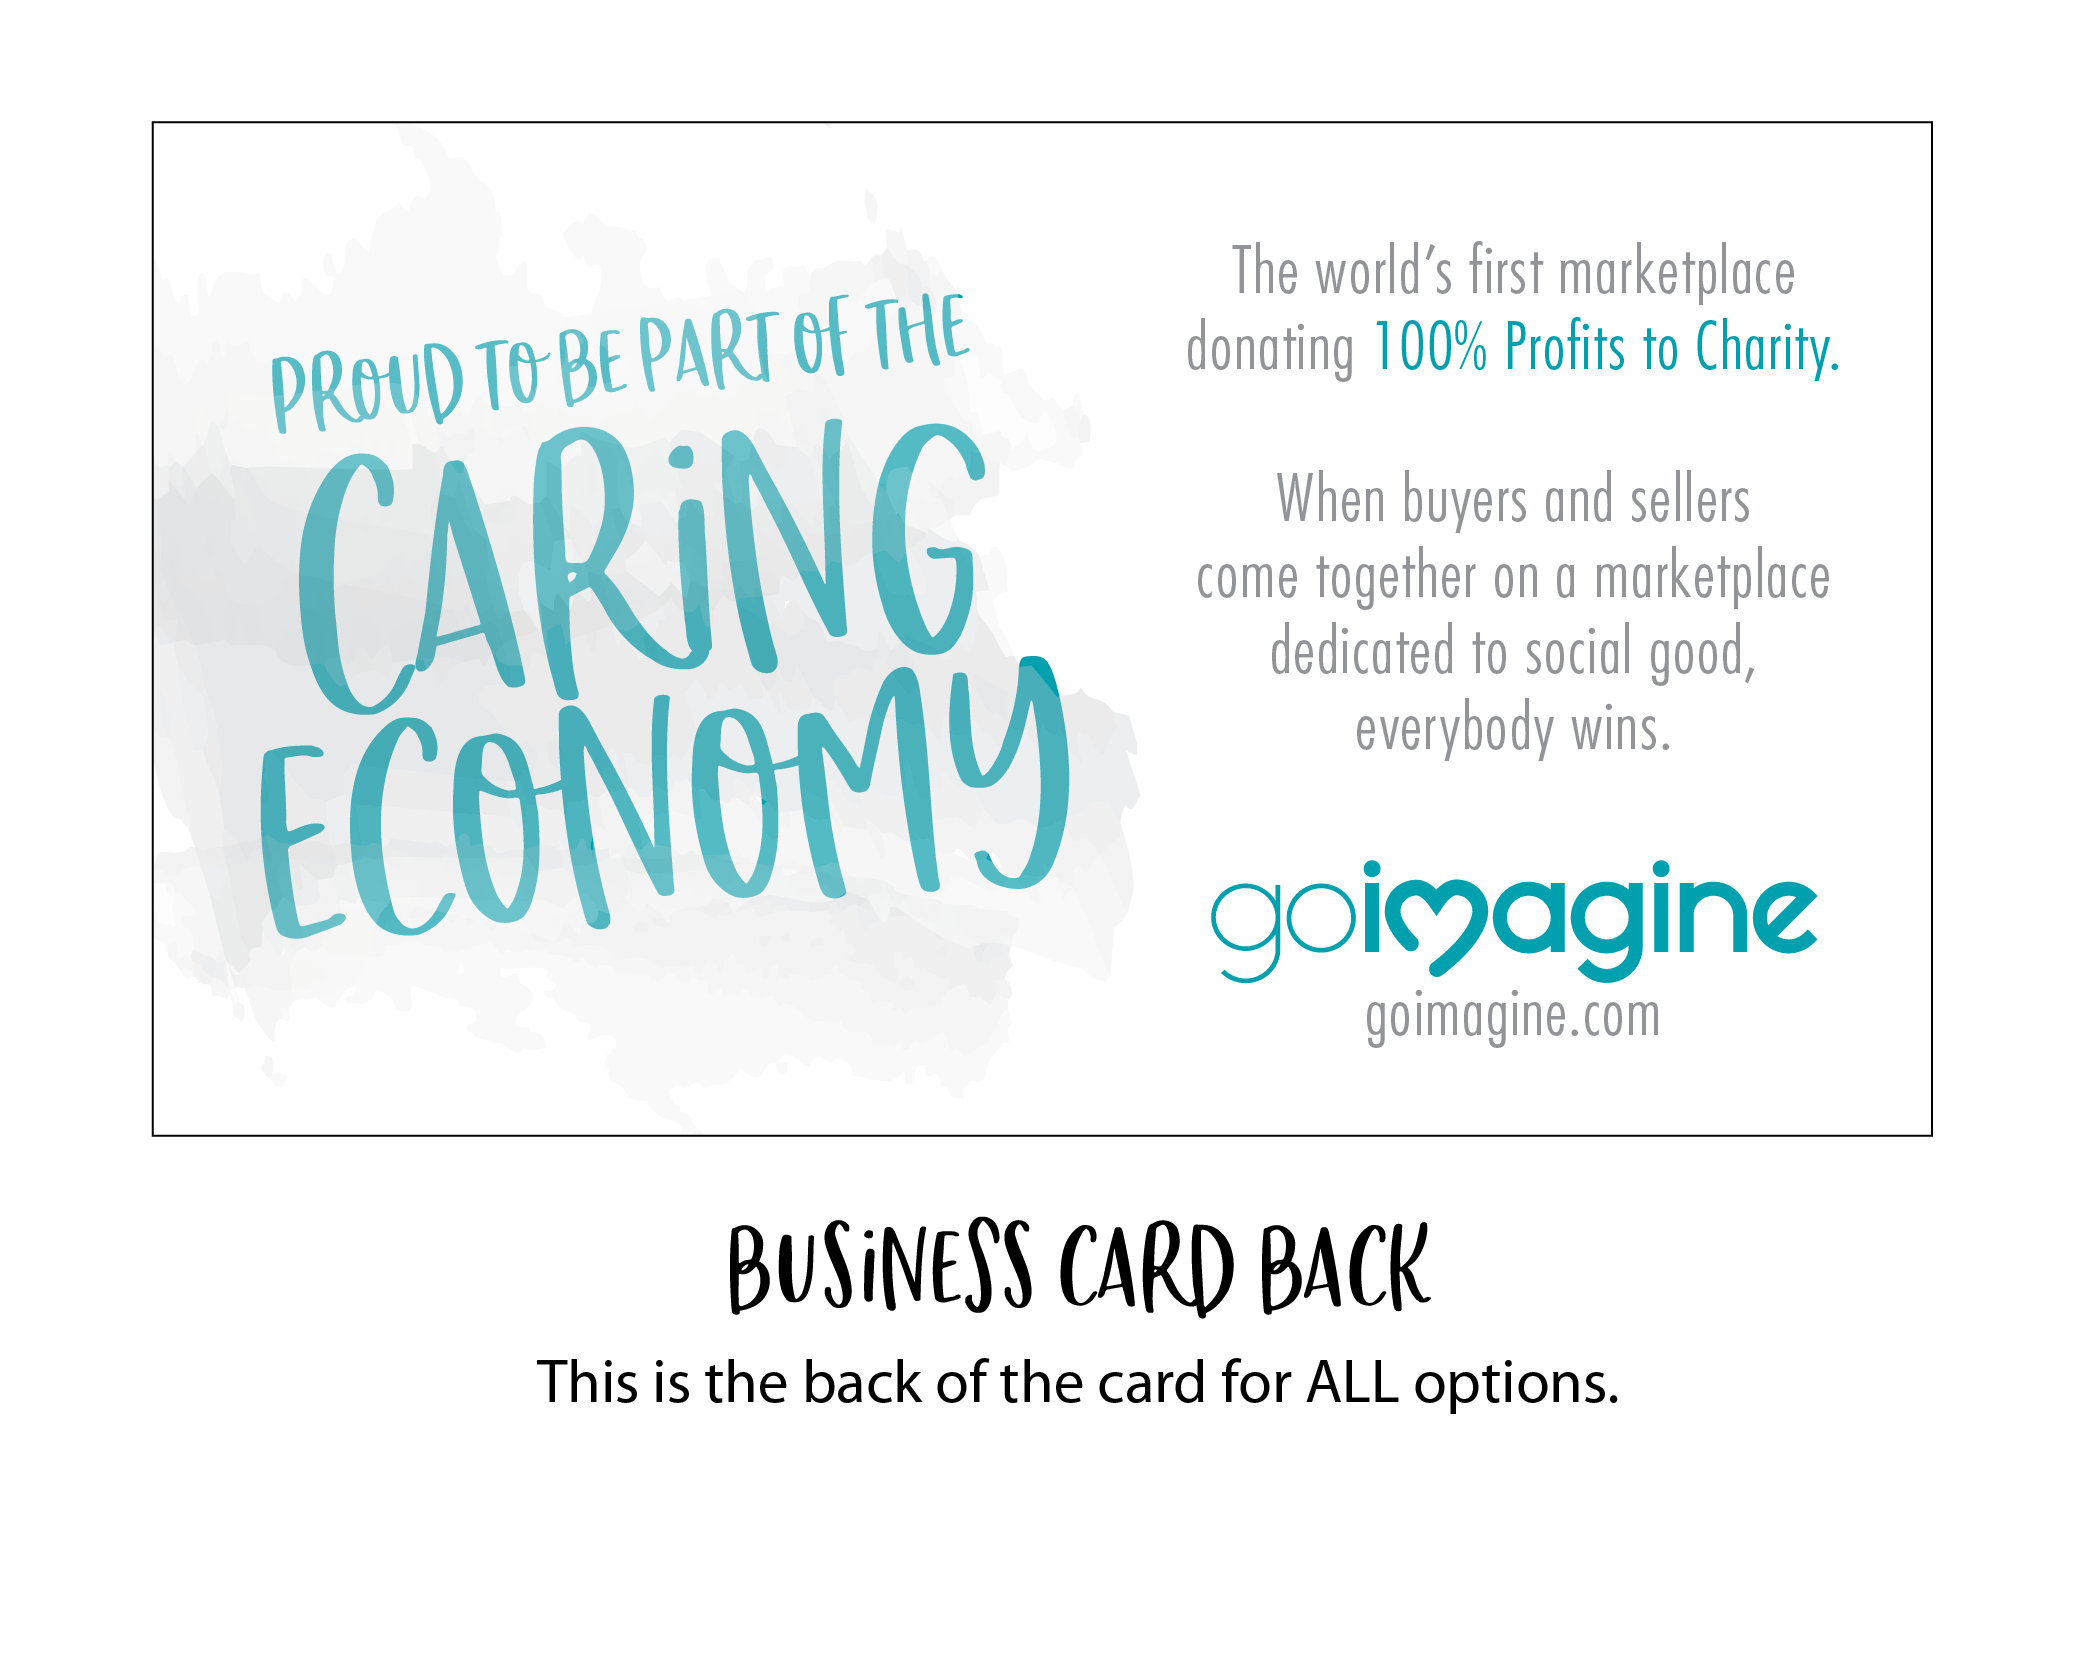 goimagine custom business card back